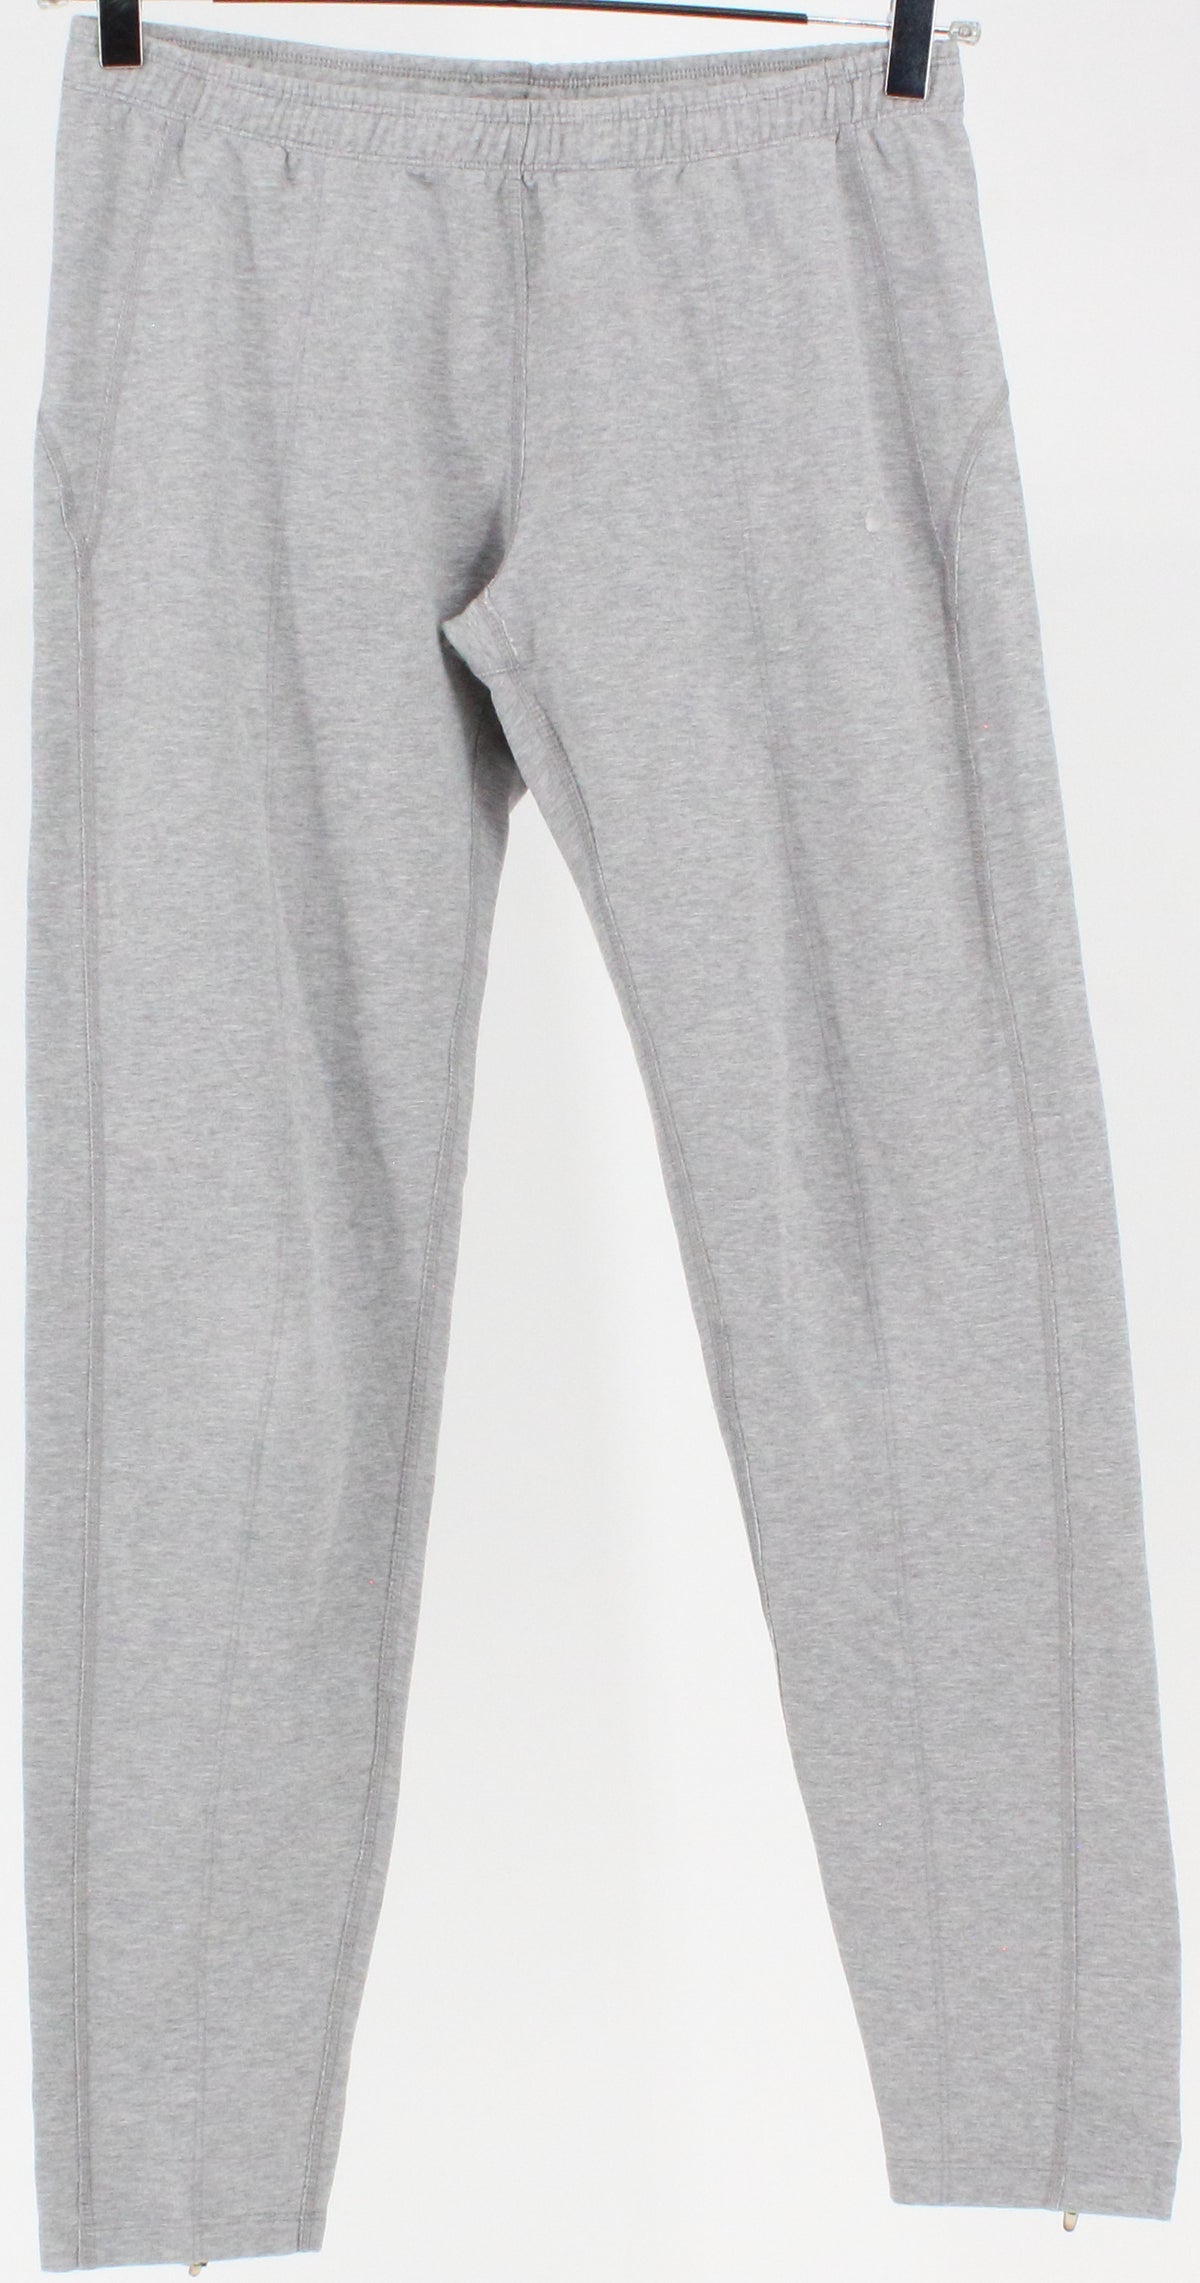 Nike Fit Grey Women's Active Pants